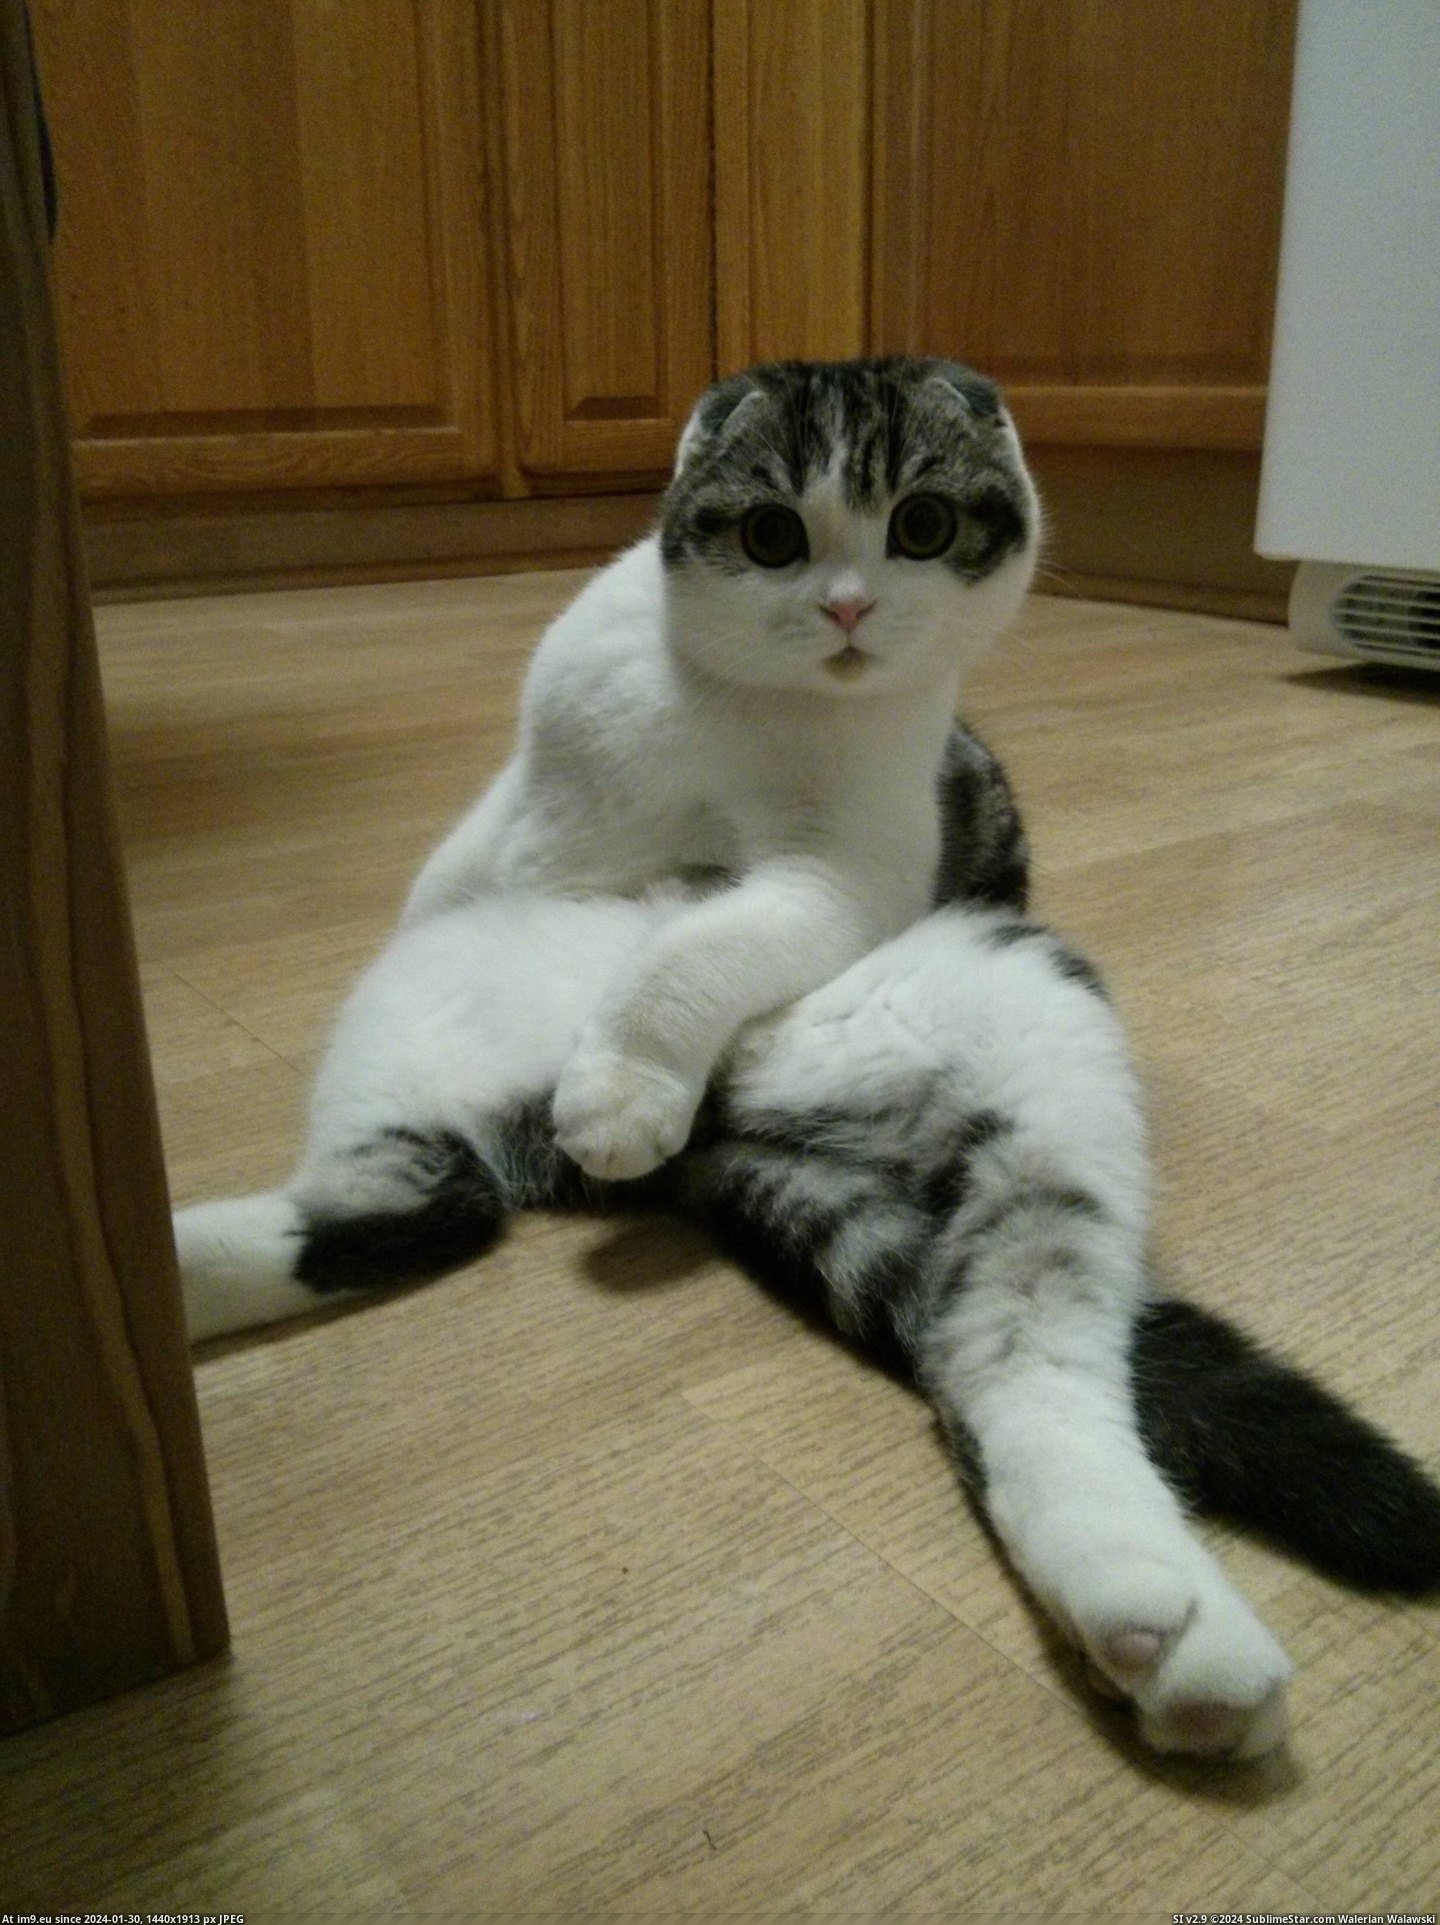 #Butt #Sits #Cat [Aww] My cat always sits on his butt. 4 Pic. (Bild von album My r/AWW favs))